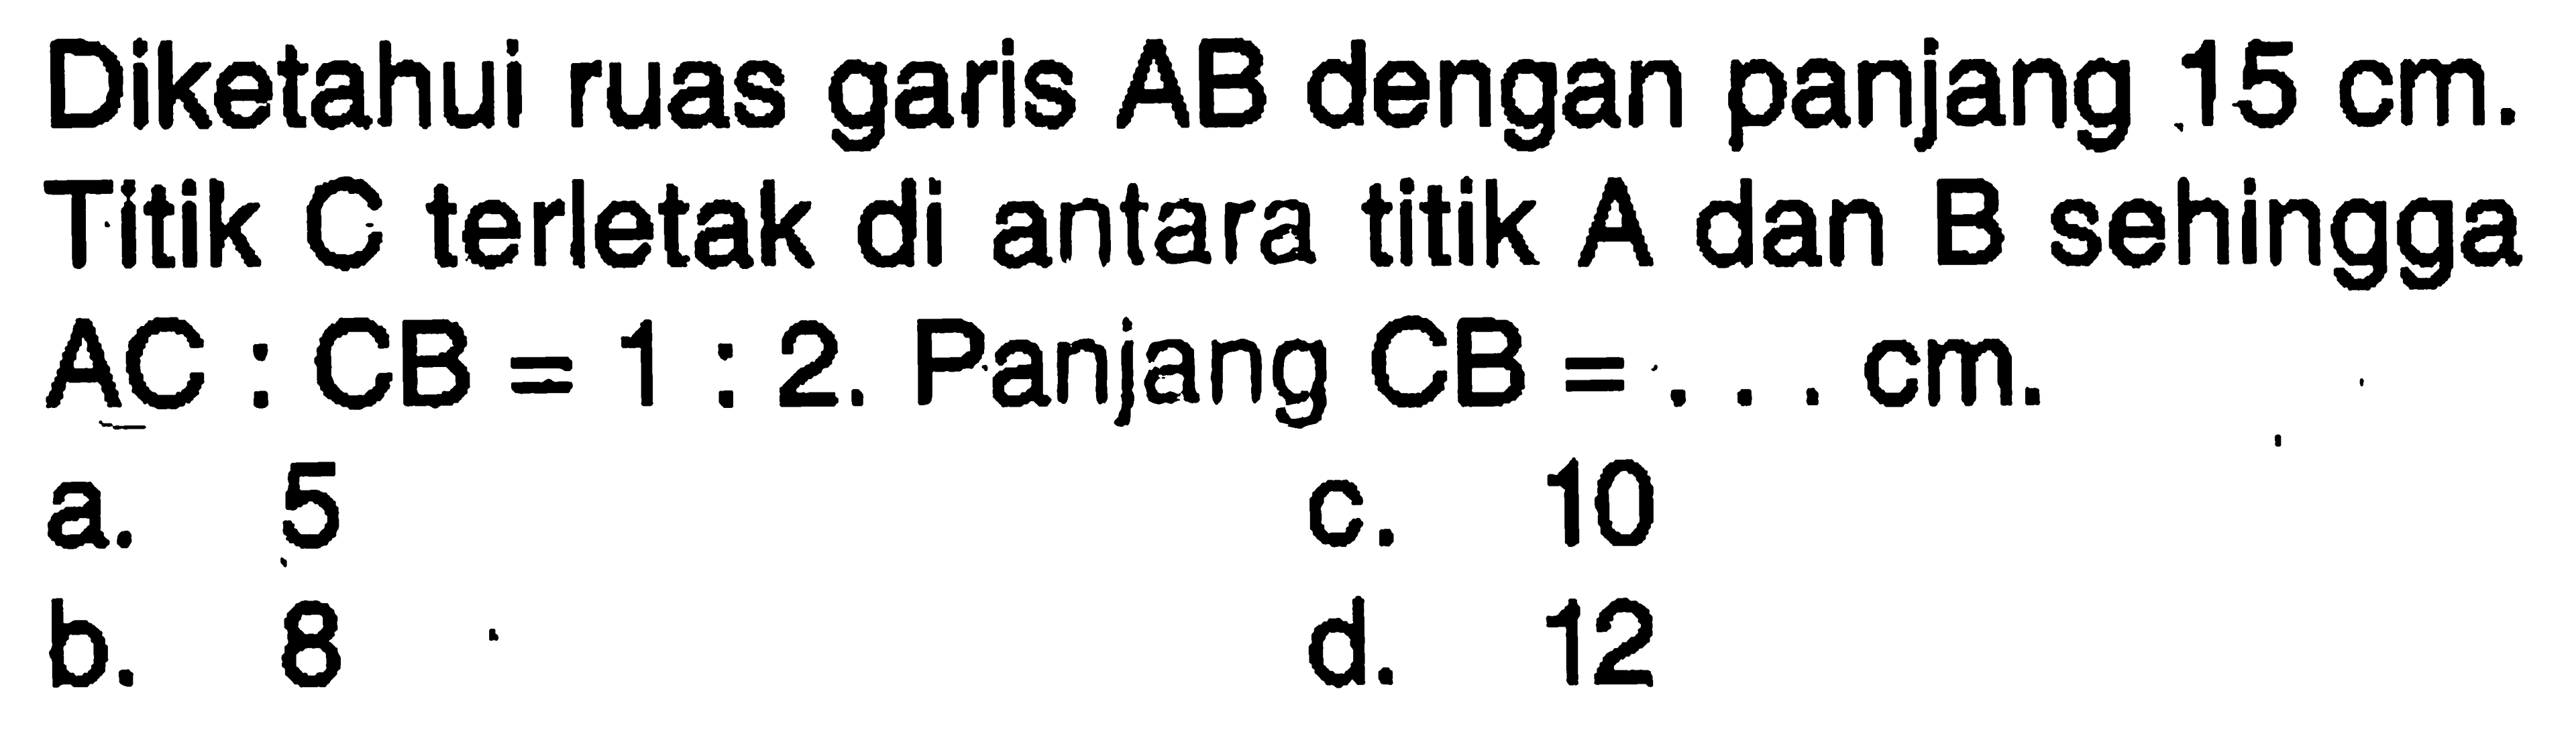 Diketahui ruas garis AB dengan panjang 15 cm. Titik C terletak di antara titik A dan B sehingga  AC:CB=1:2. Panjang CB=... cm